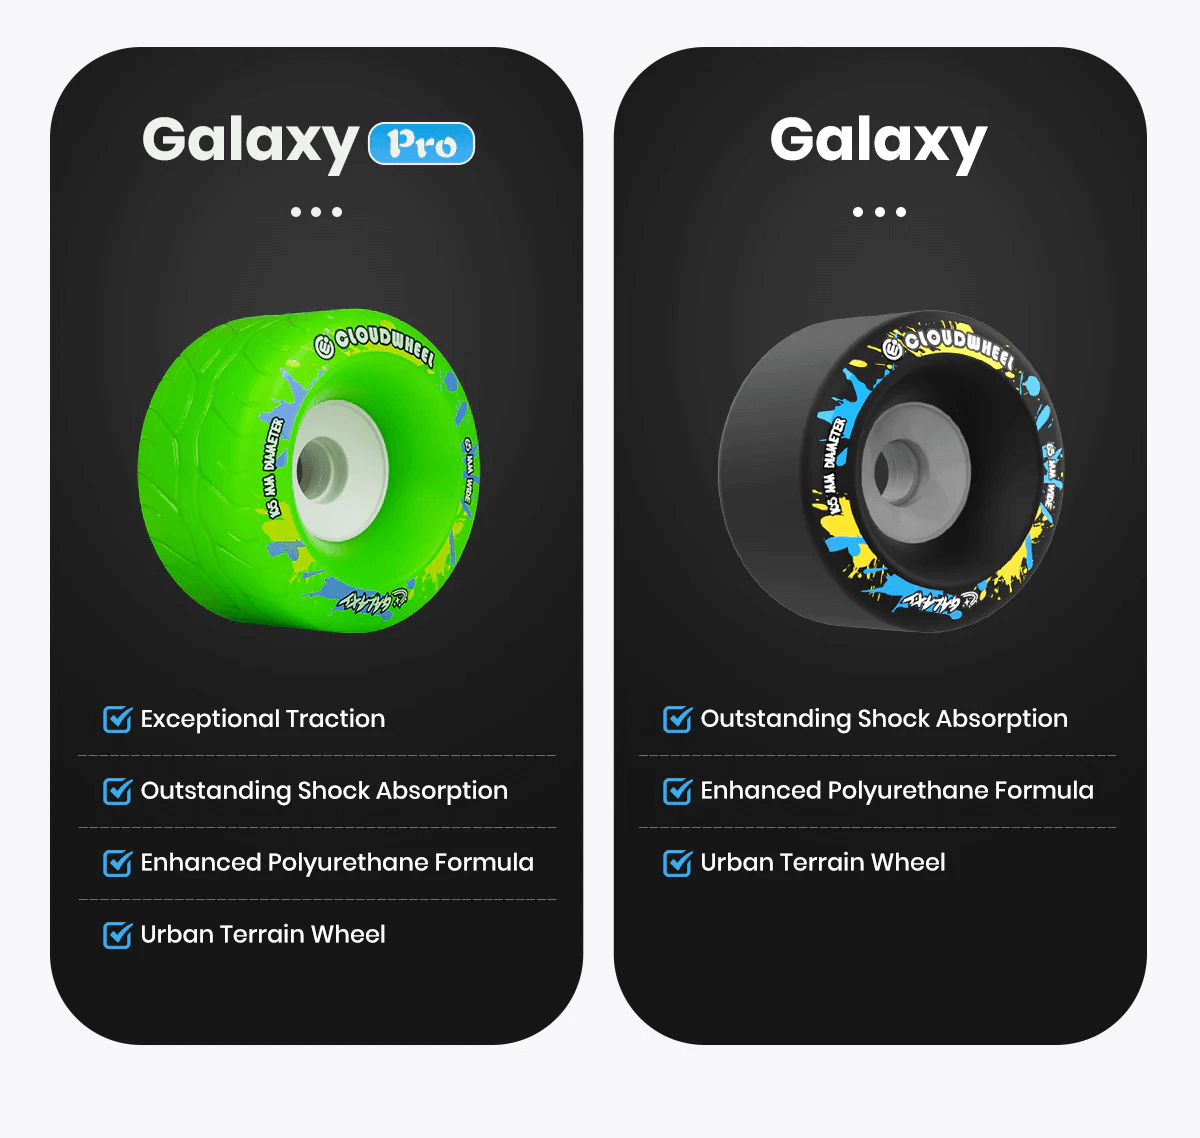 CLOUDWHEEL Galaxy Pro 105mm Urban All Terrain Off Road Electric Skateboard Wheels Compare